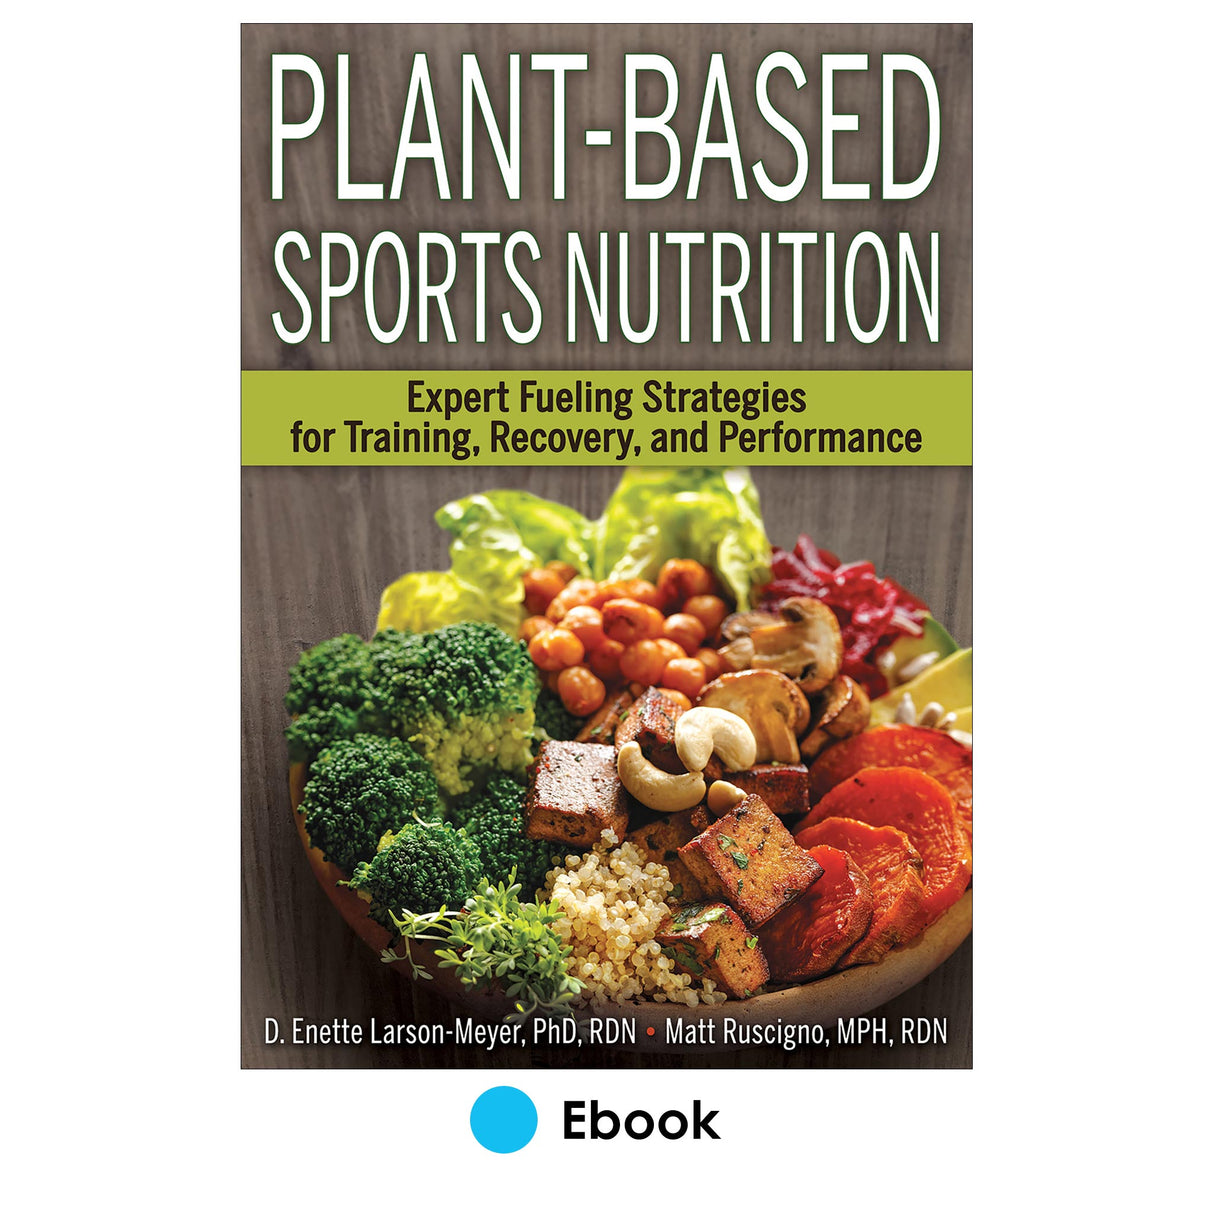 Plant-Based Sports Nutrition epub